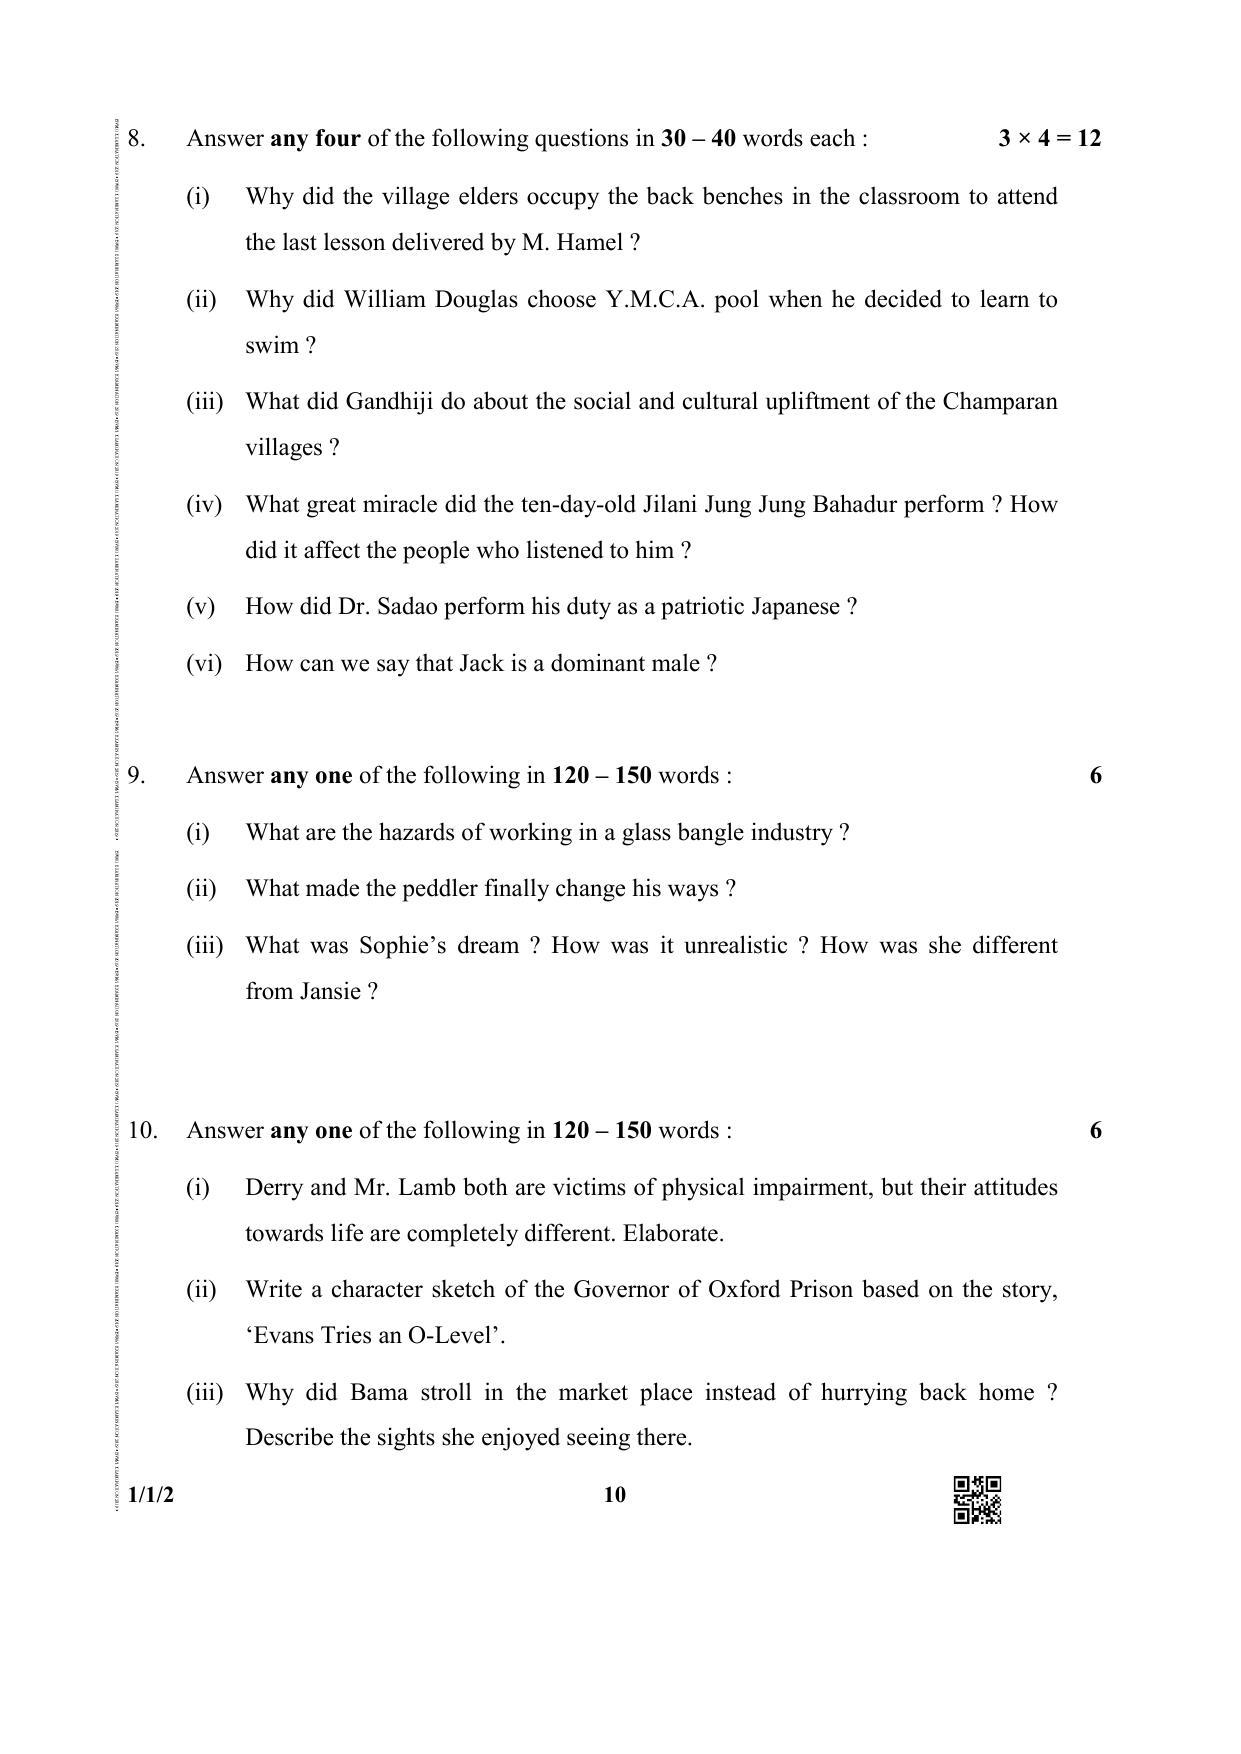 CBSE Class 12 1-1-2 (English Core) 2019 Question Paper - Page 10